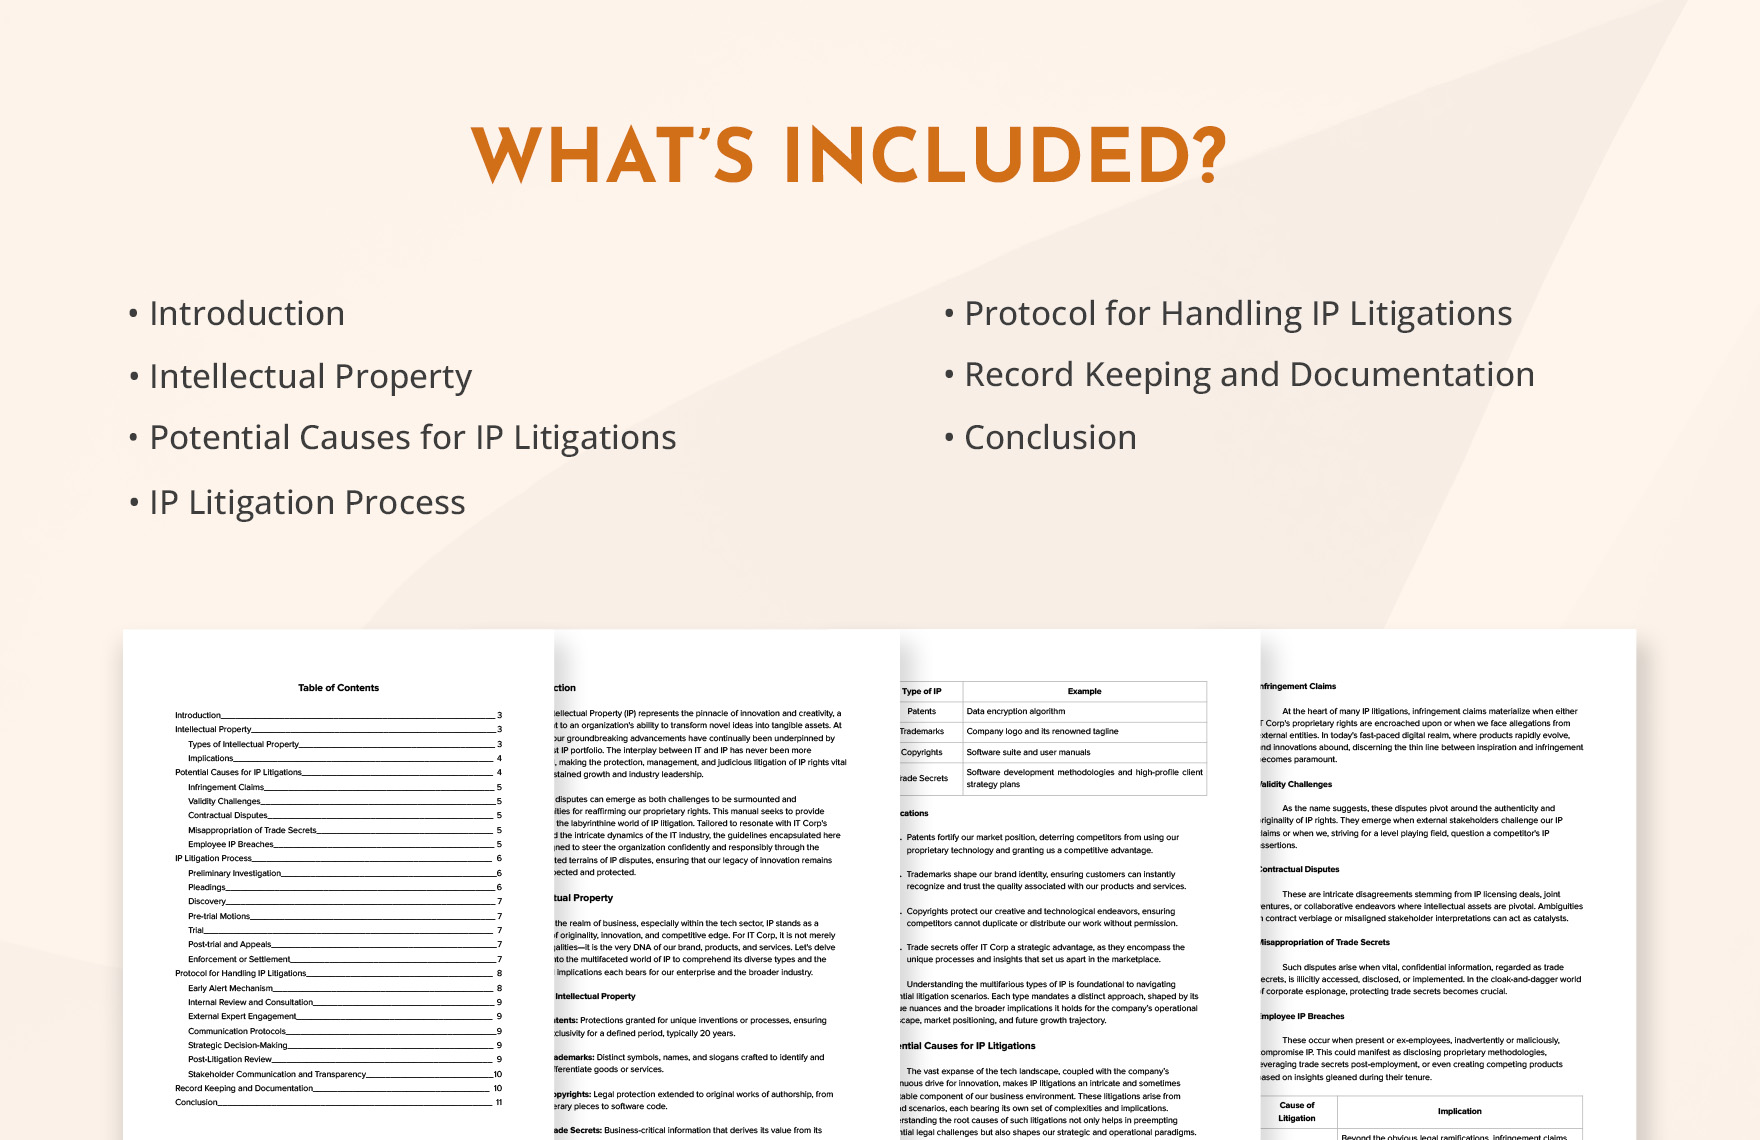 IT Intellectual Property Litigation Manual Template